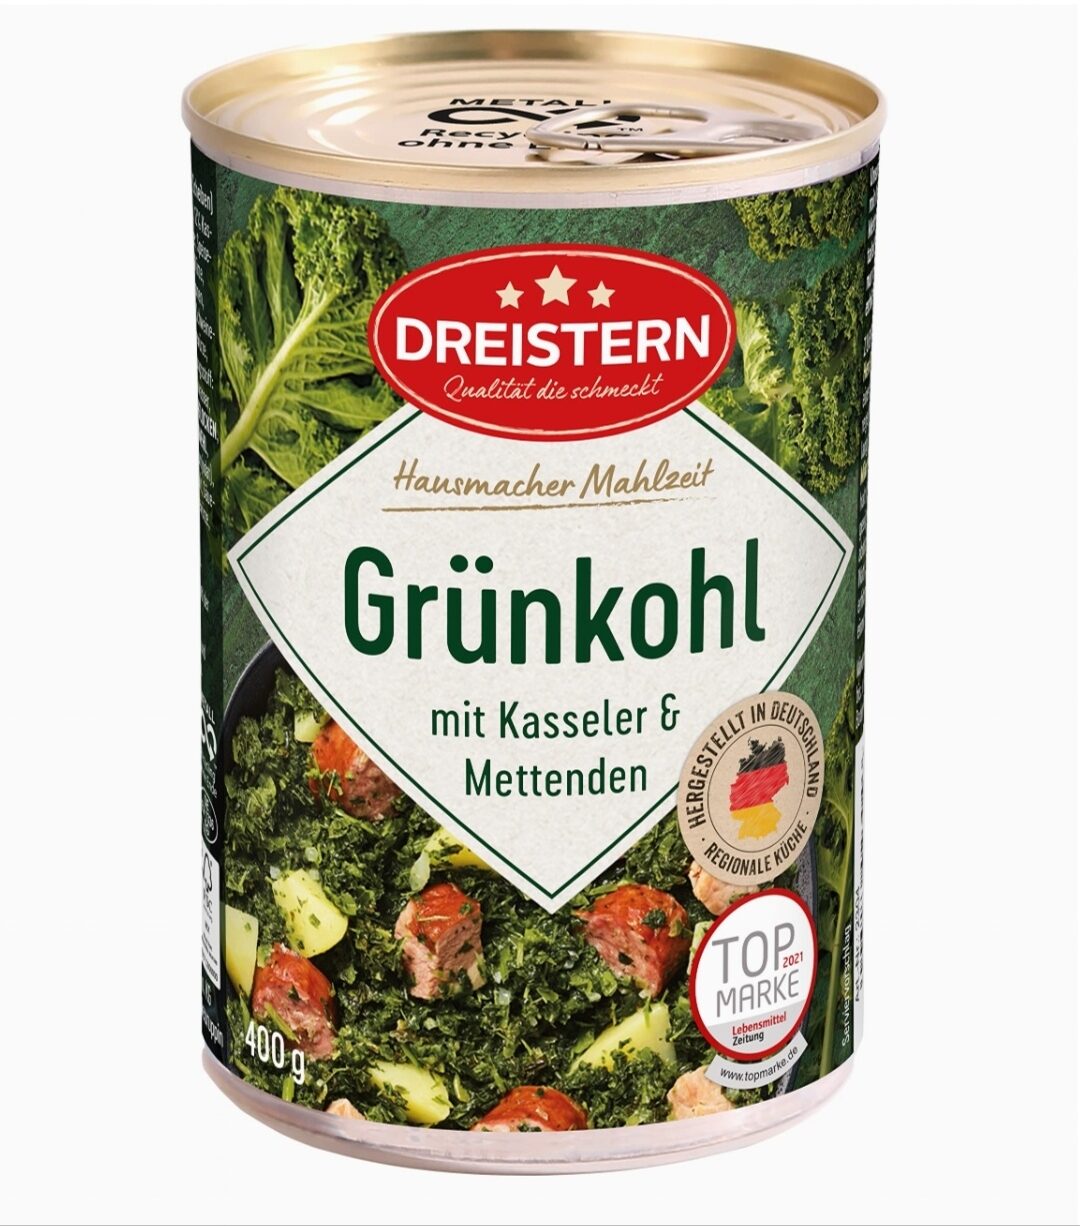 Grünkohl mit Kasseler & Mettenden - Produkt